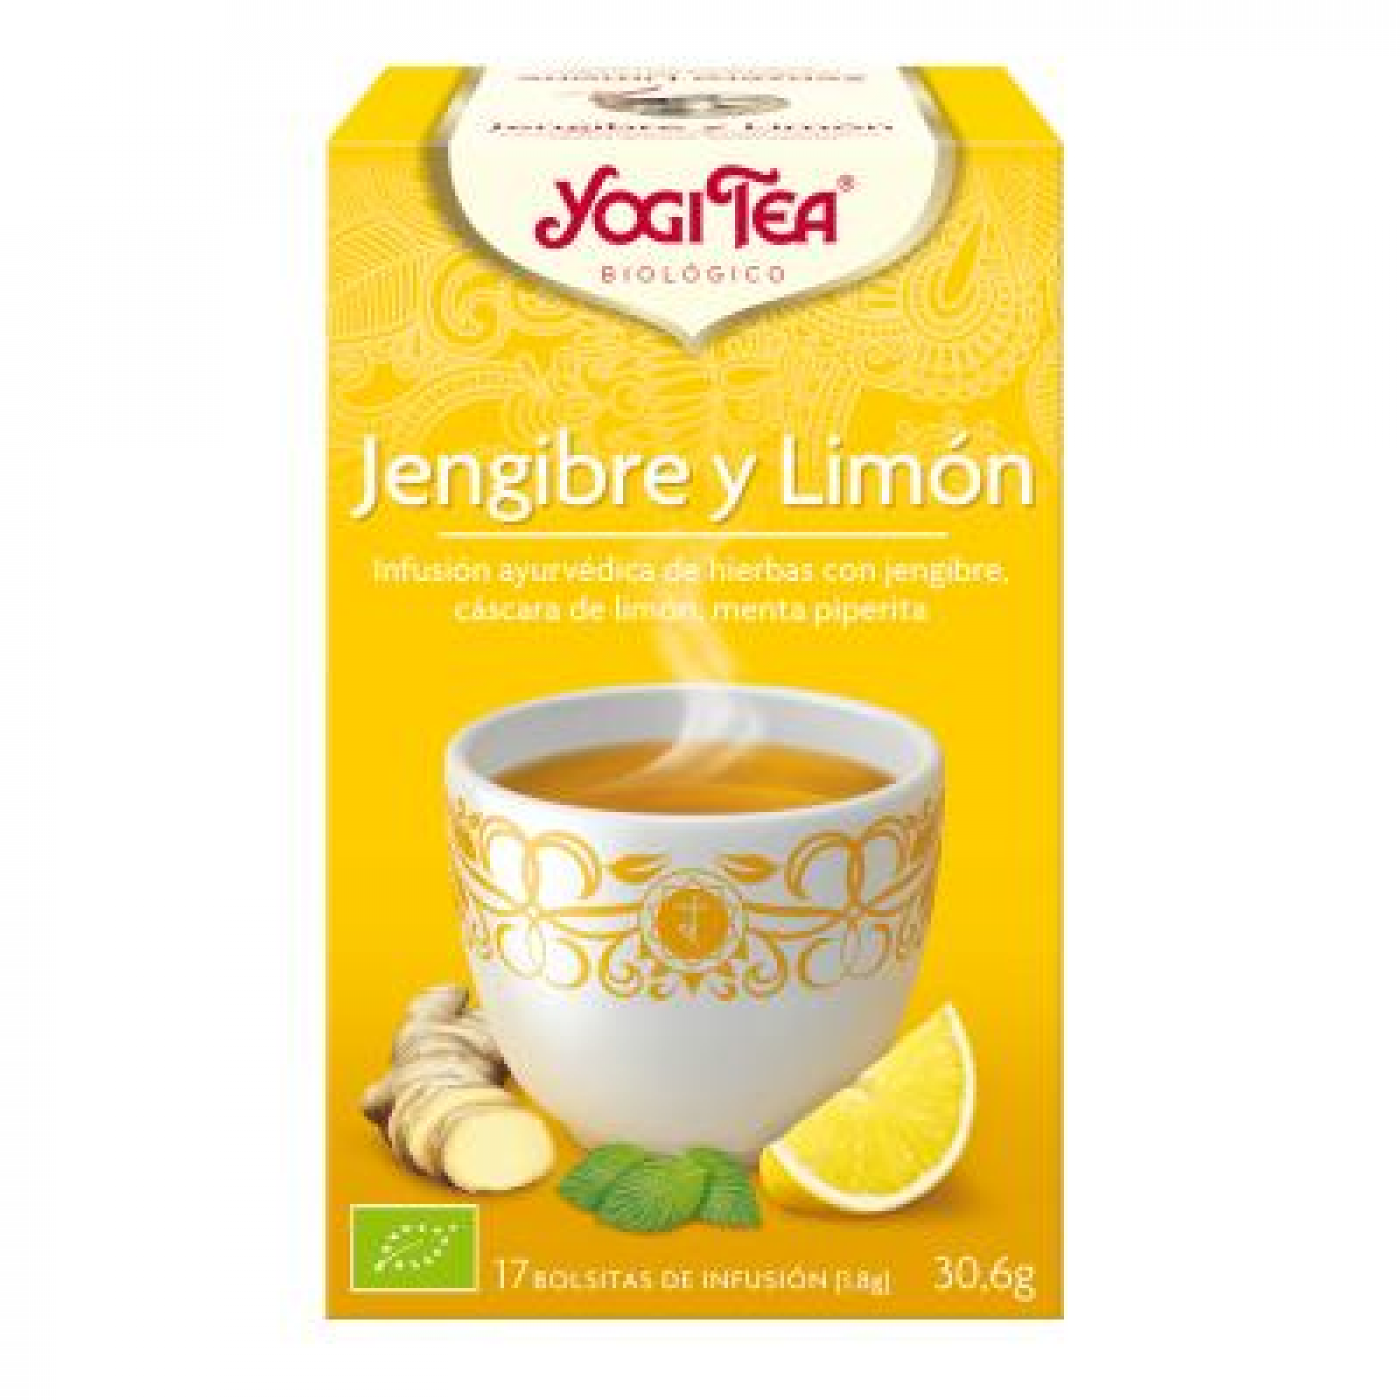 Yogi Tea Jengibre y Limón, 17 Bolsitas| Farmacia Barata